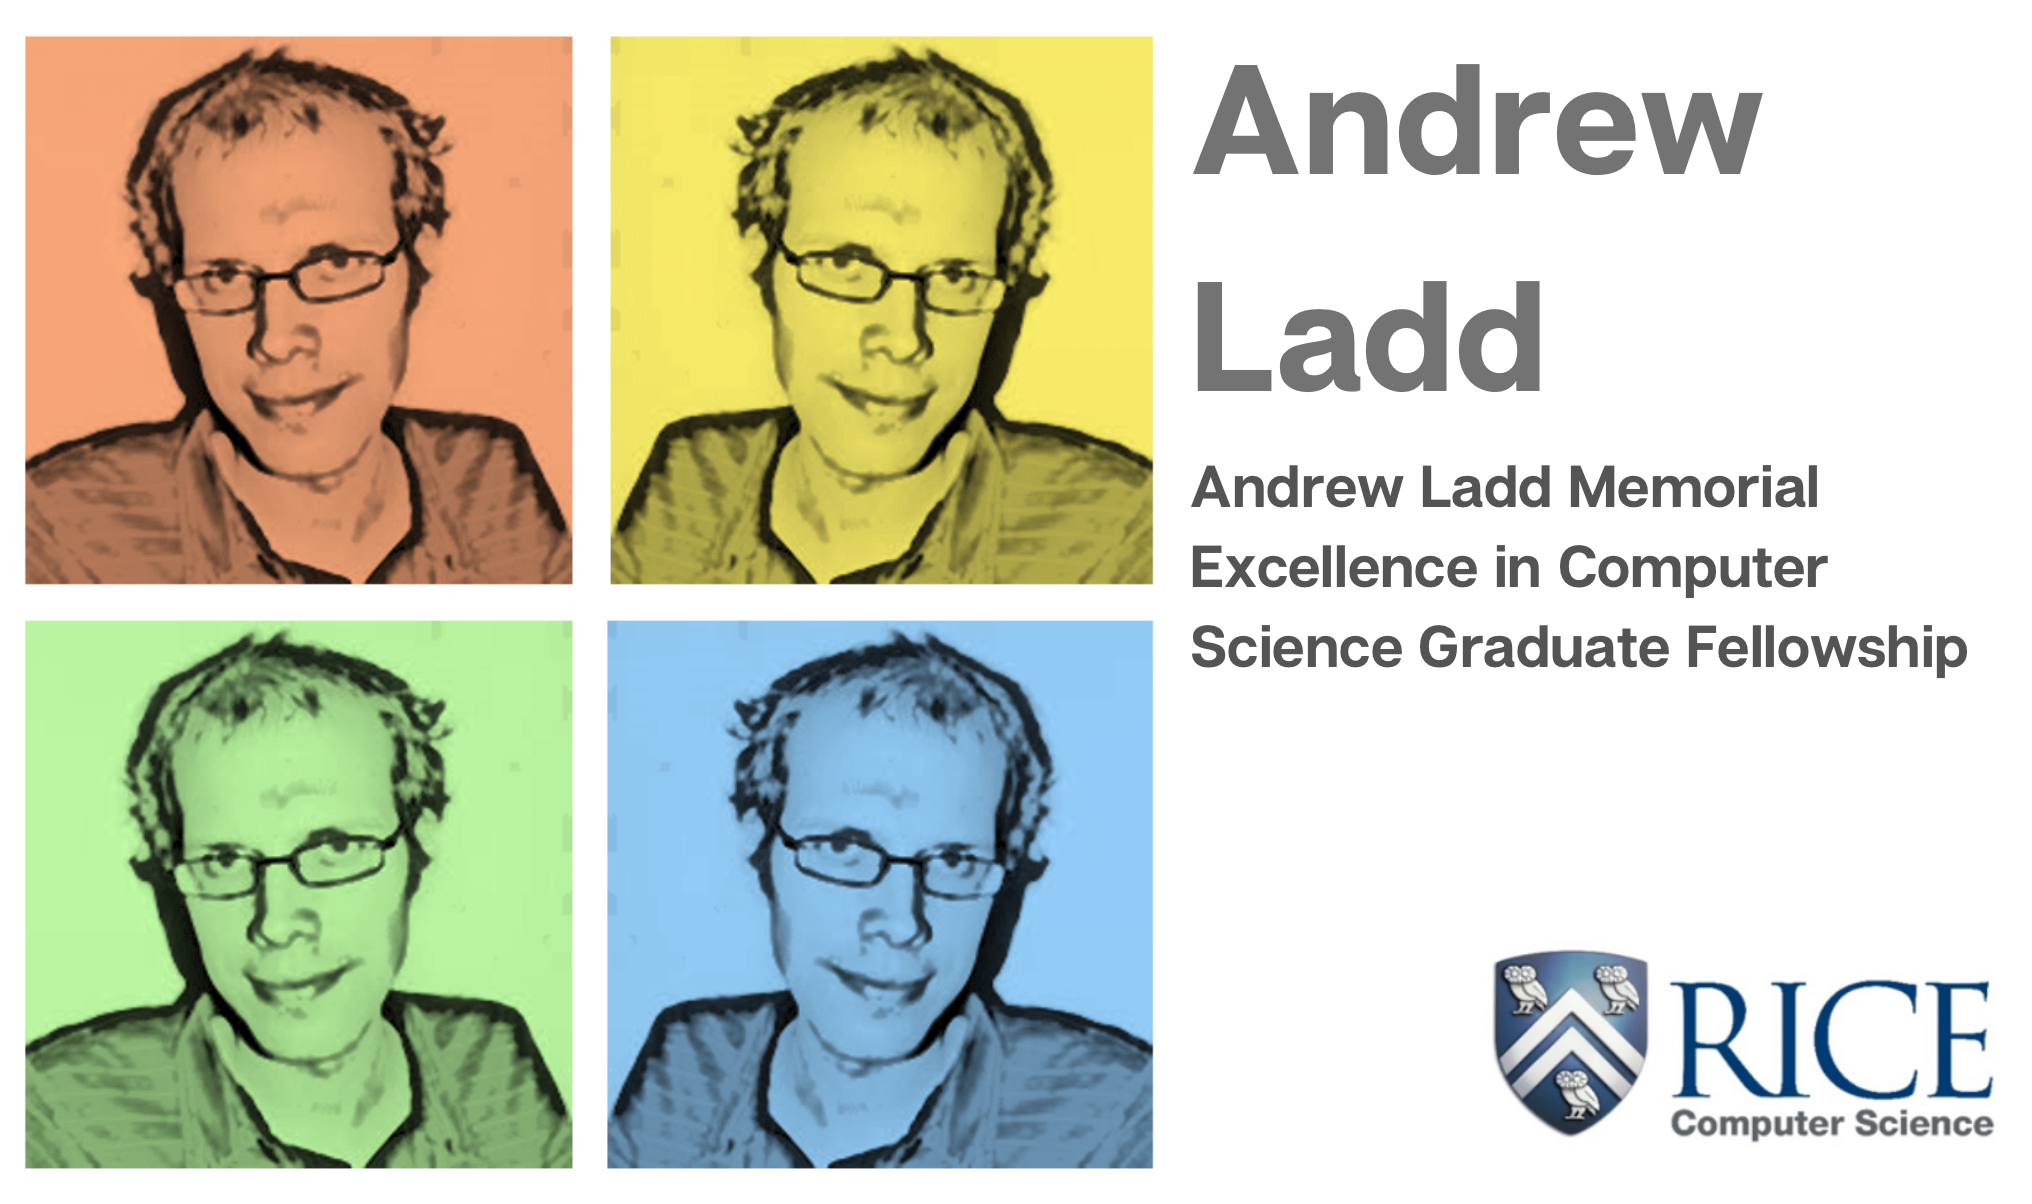 Andrew Ladd